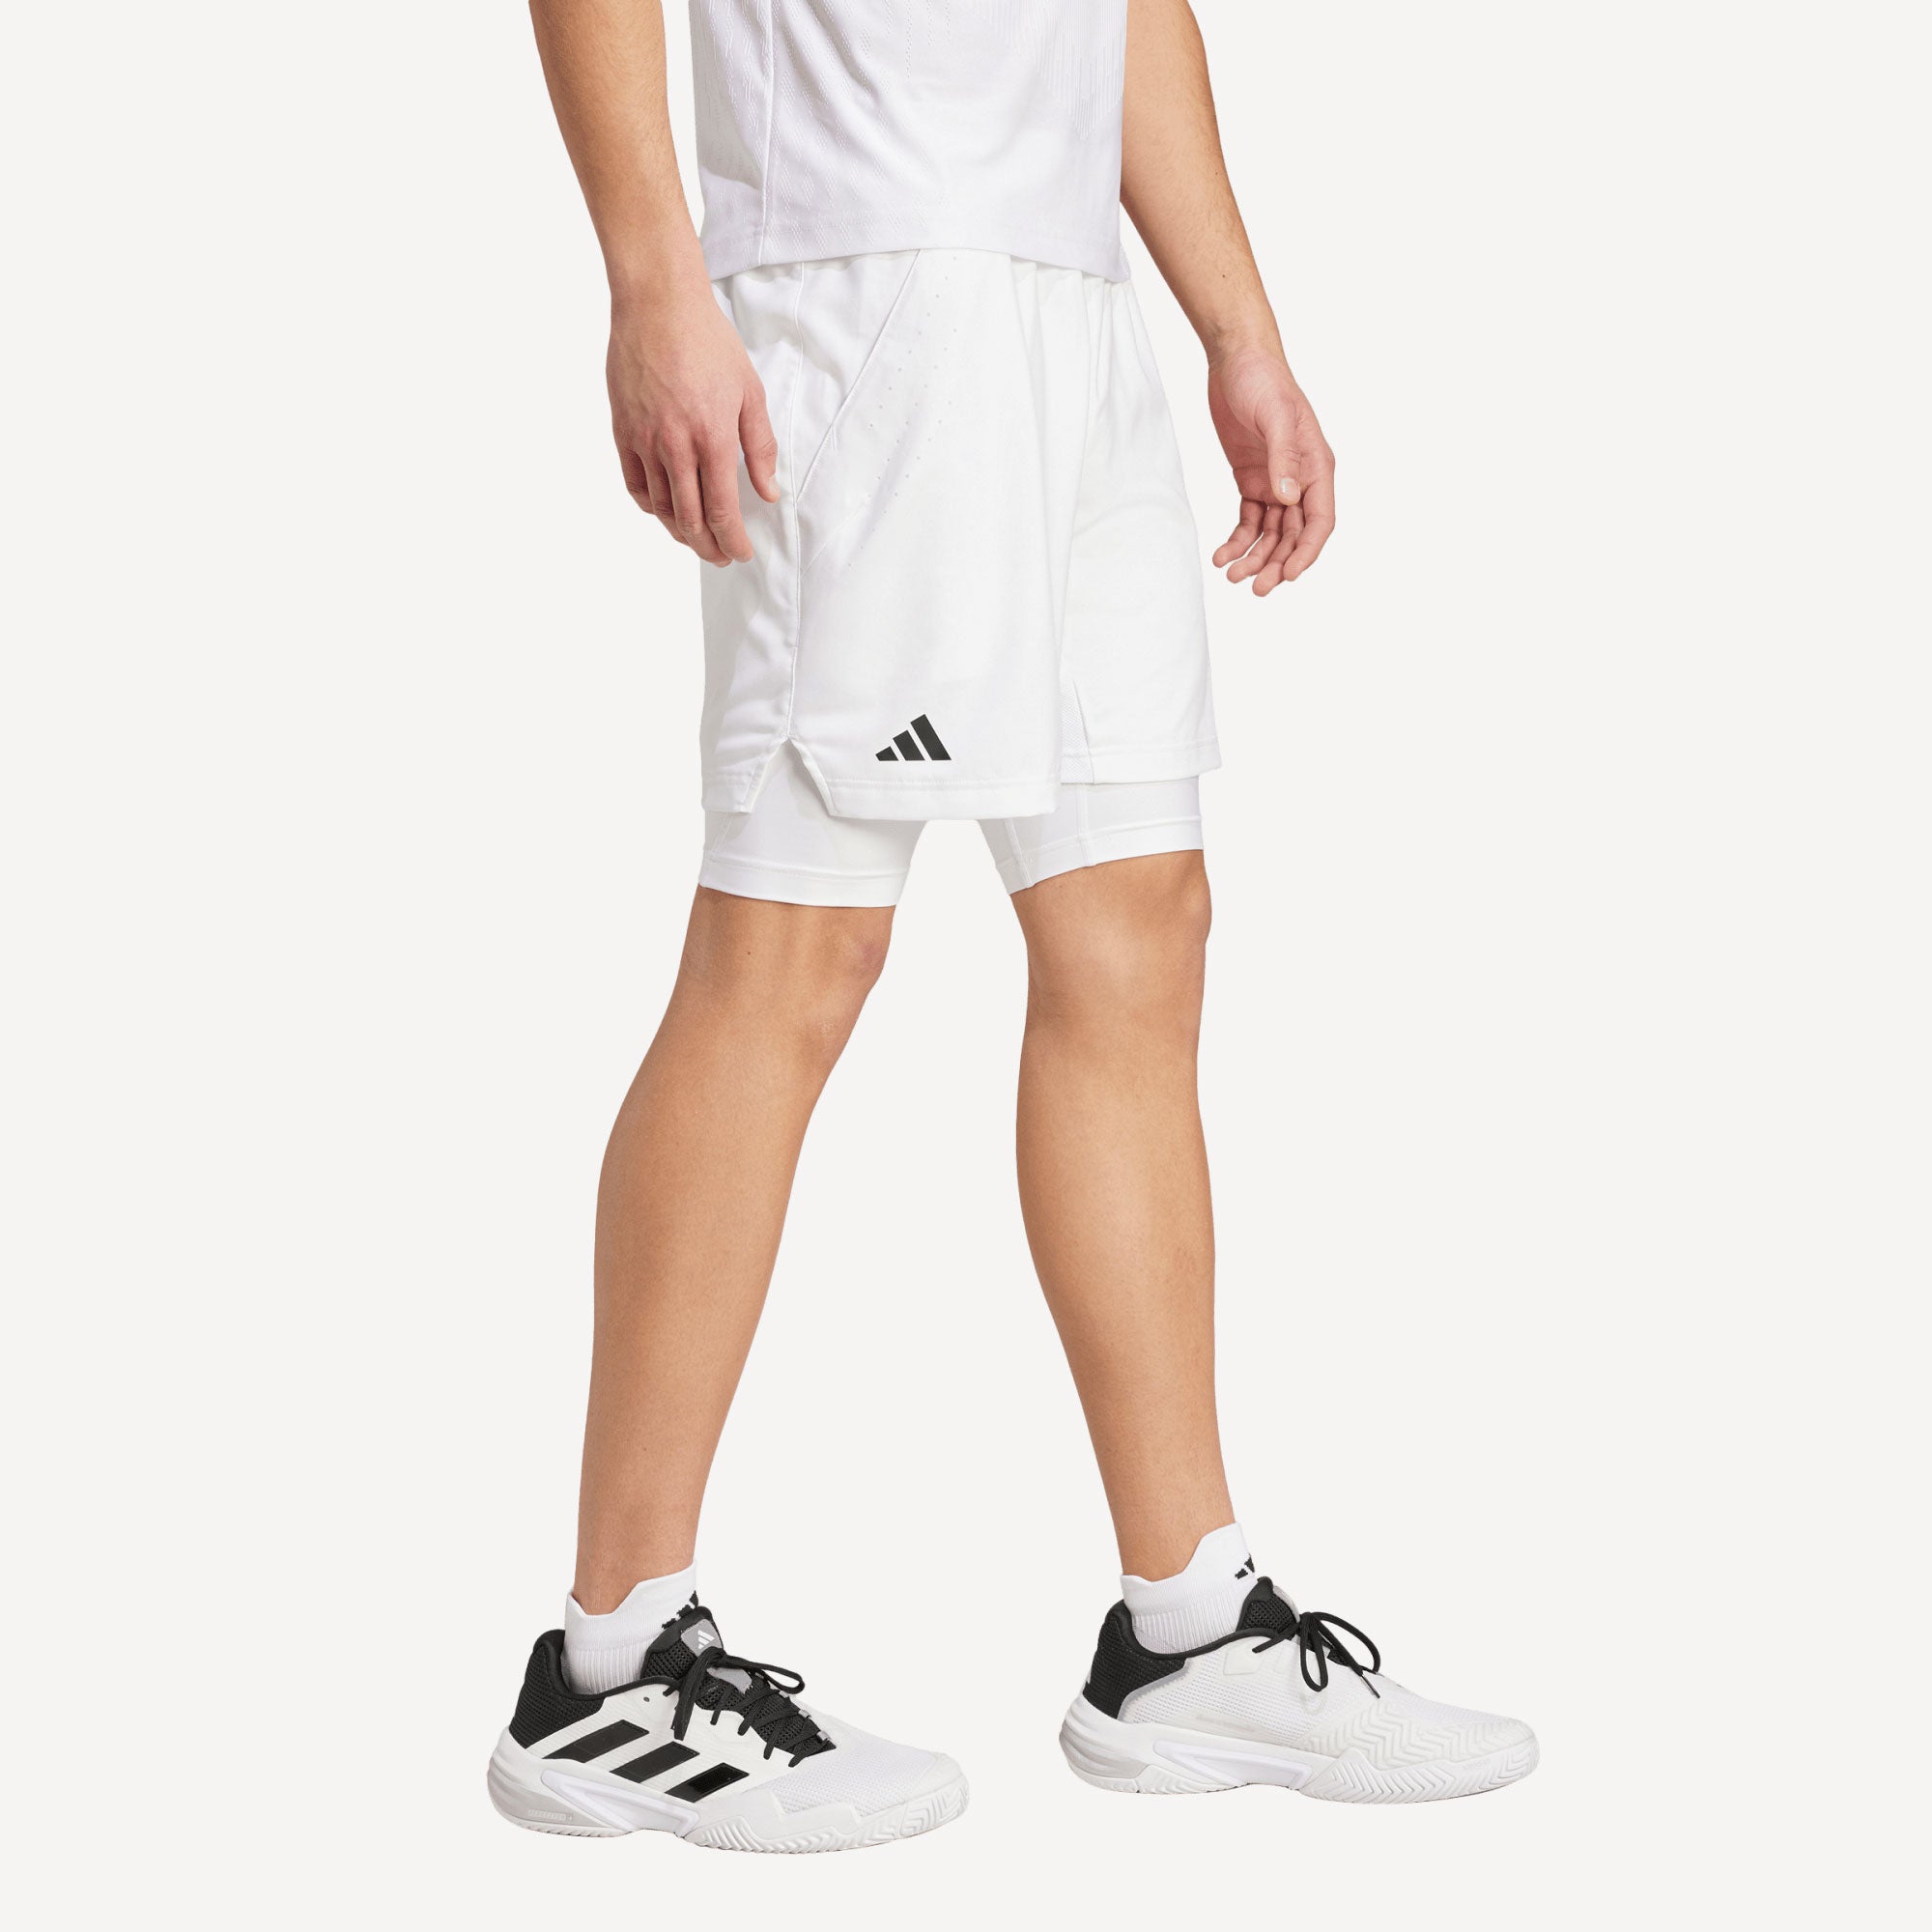 adidas Pro London Men's Tennis Shorts and Inner Shorts Set - White (3)